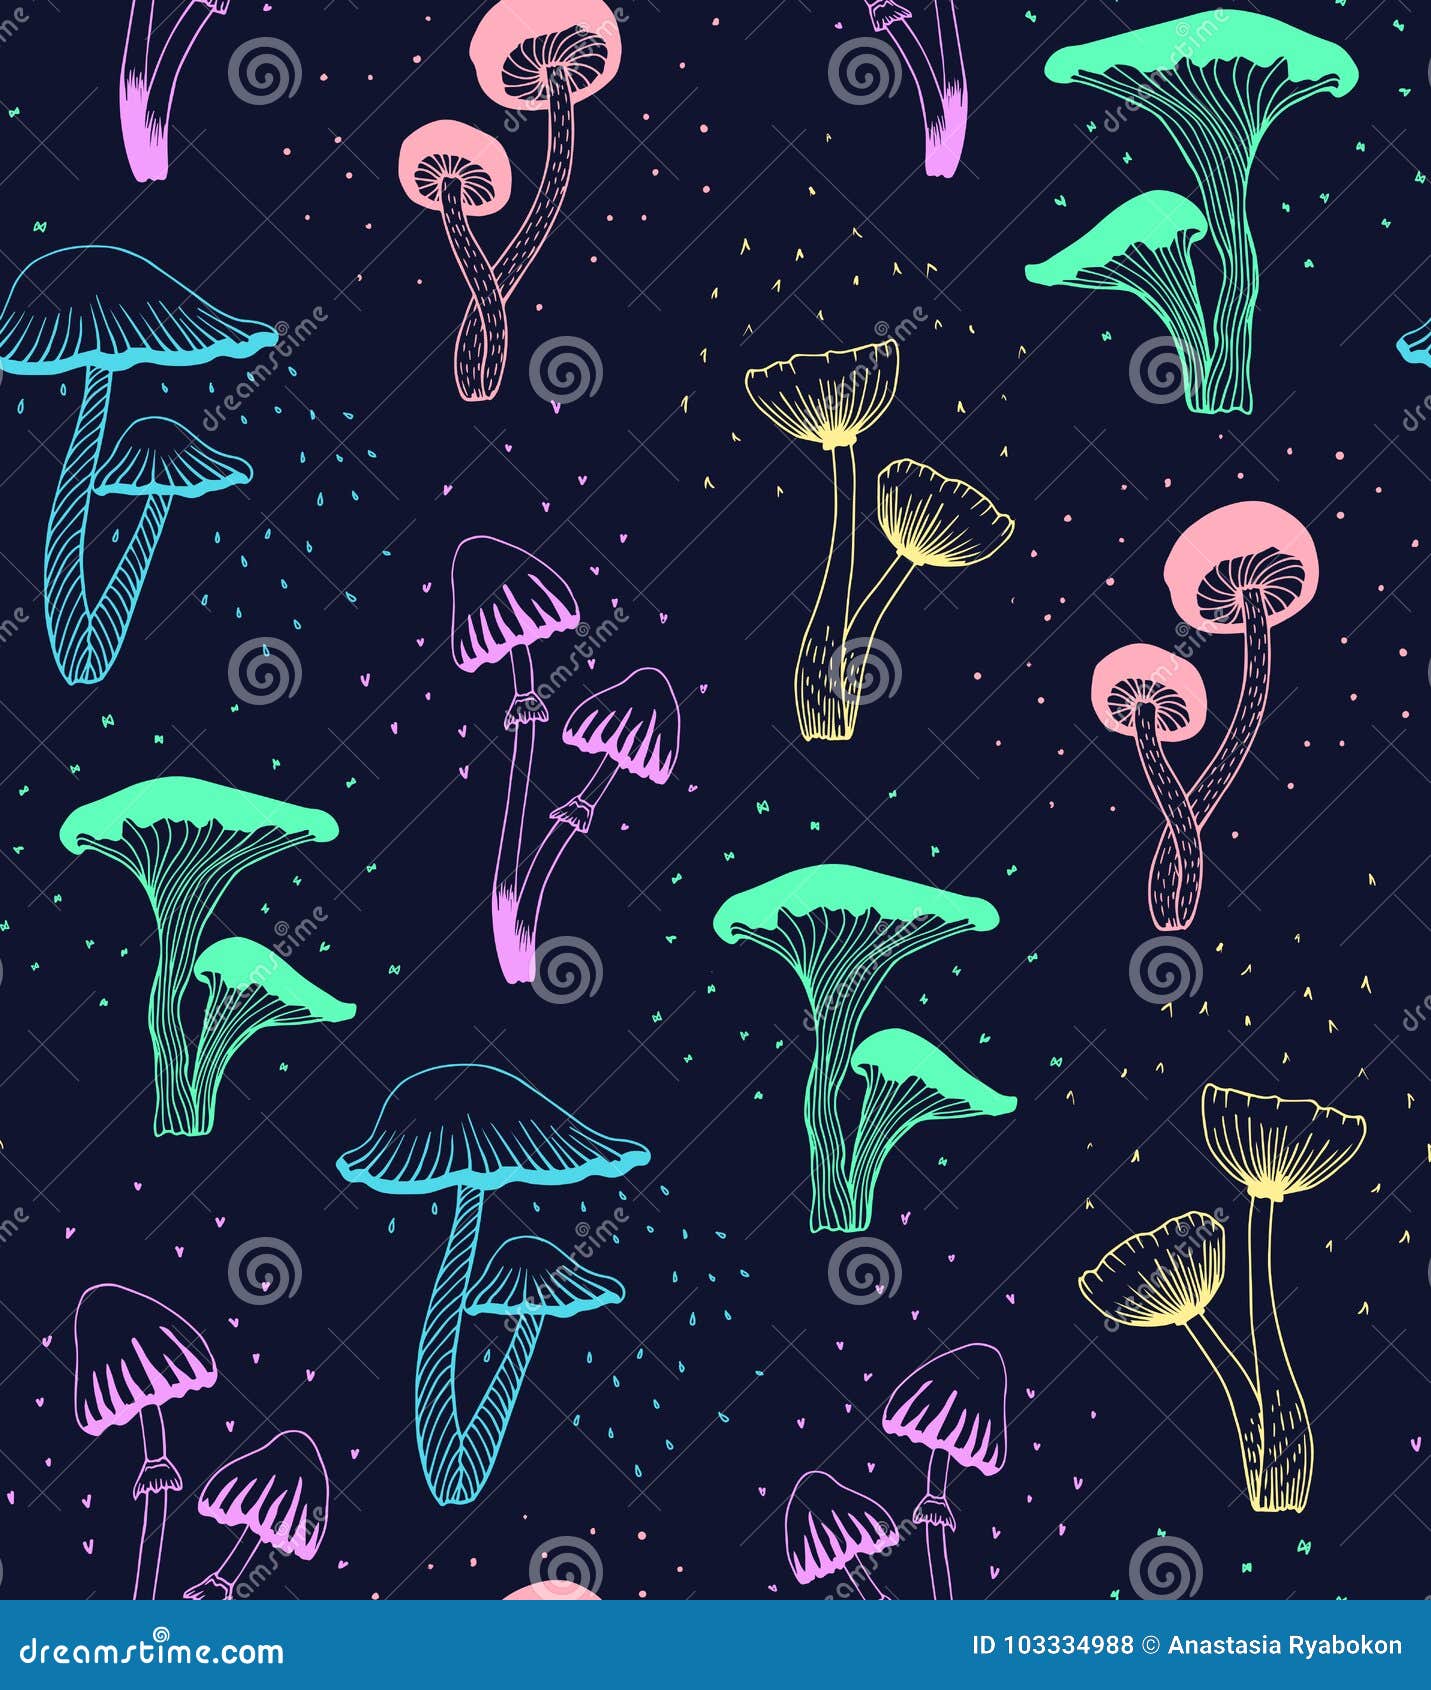 neon mushrooms handrawn pattern 